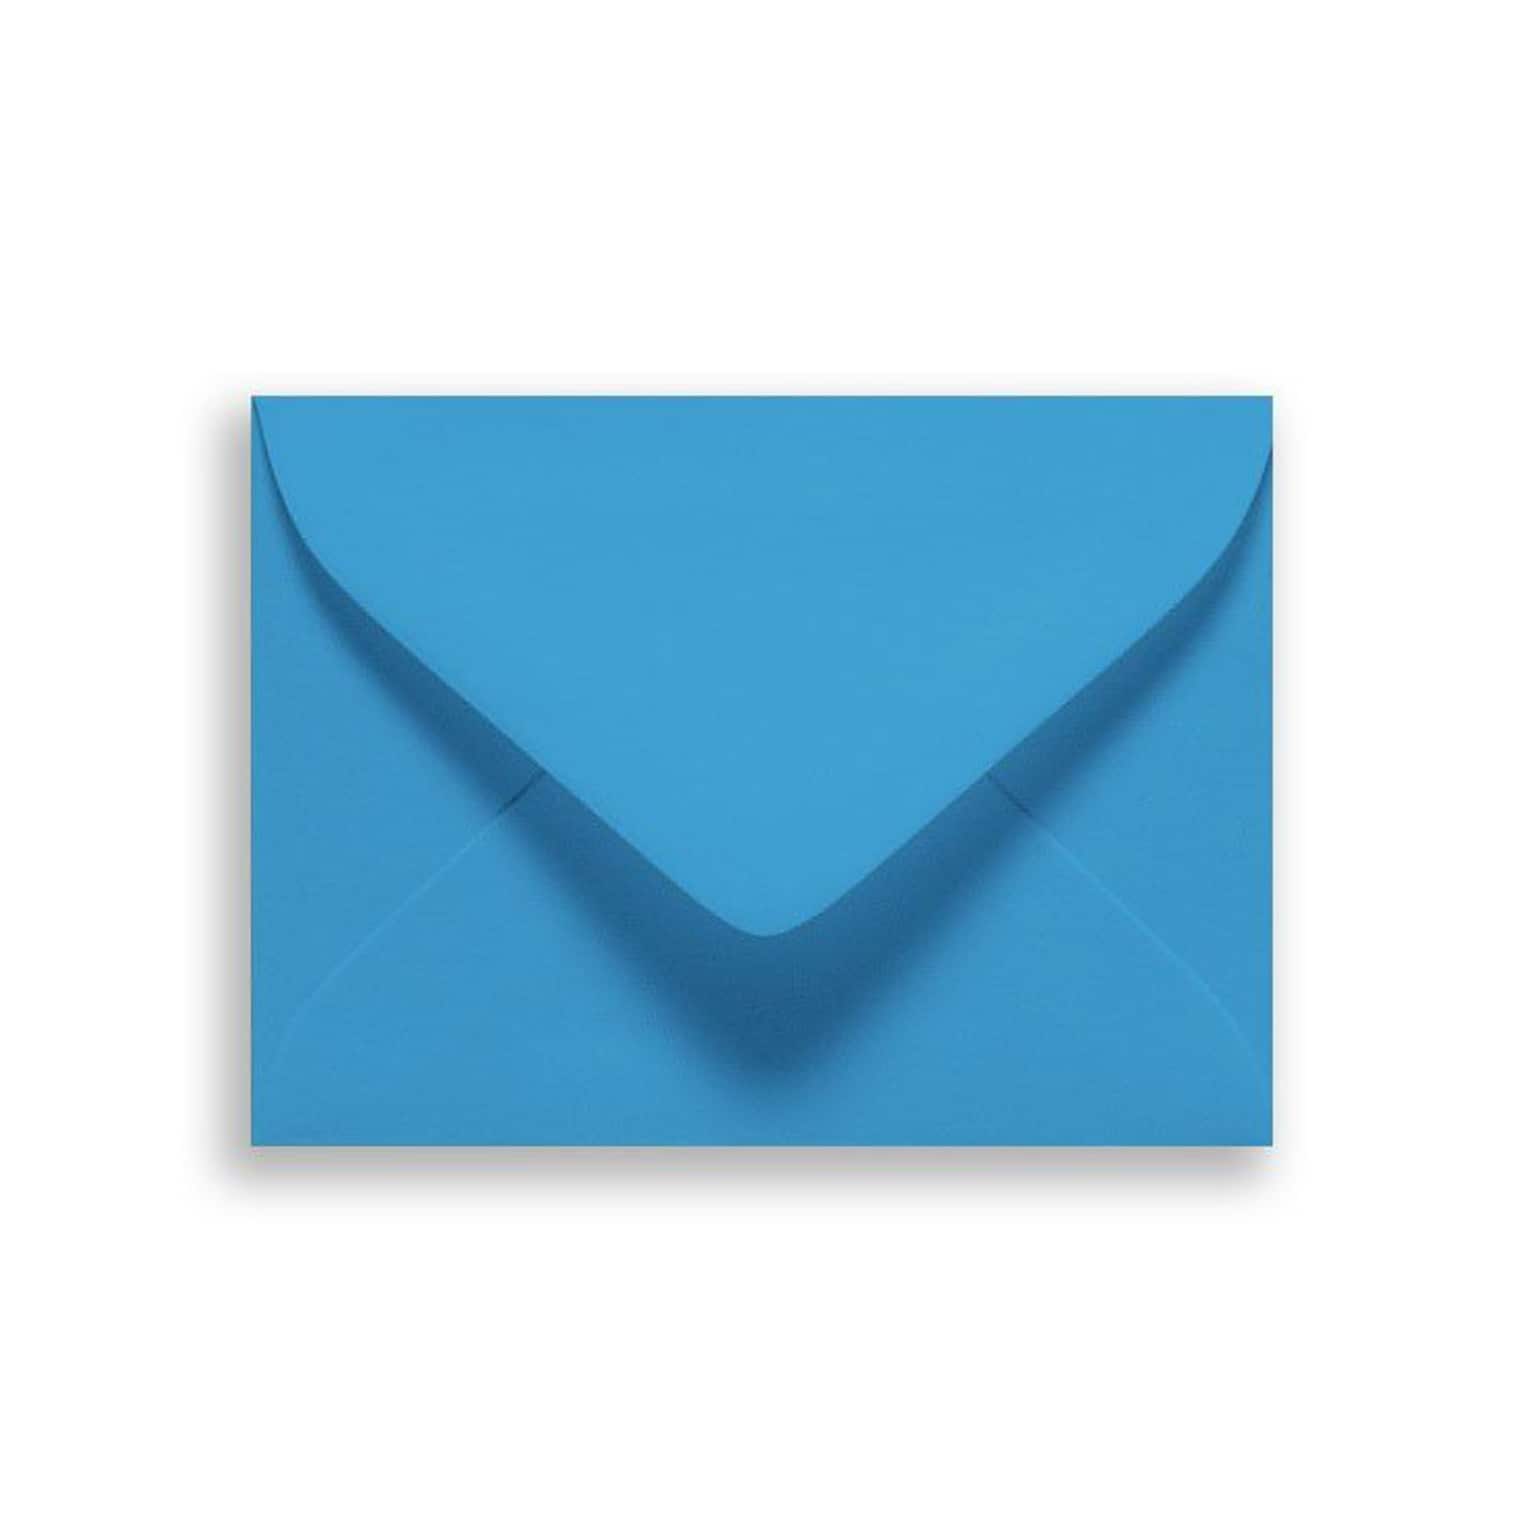 LUX #17 Mini Envelopes (2 11/16 x 3 11/16) 50/Box, Pool (LUXLEVC-102-50)